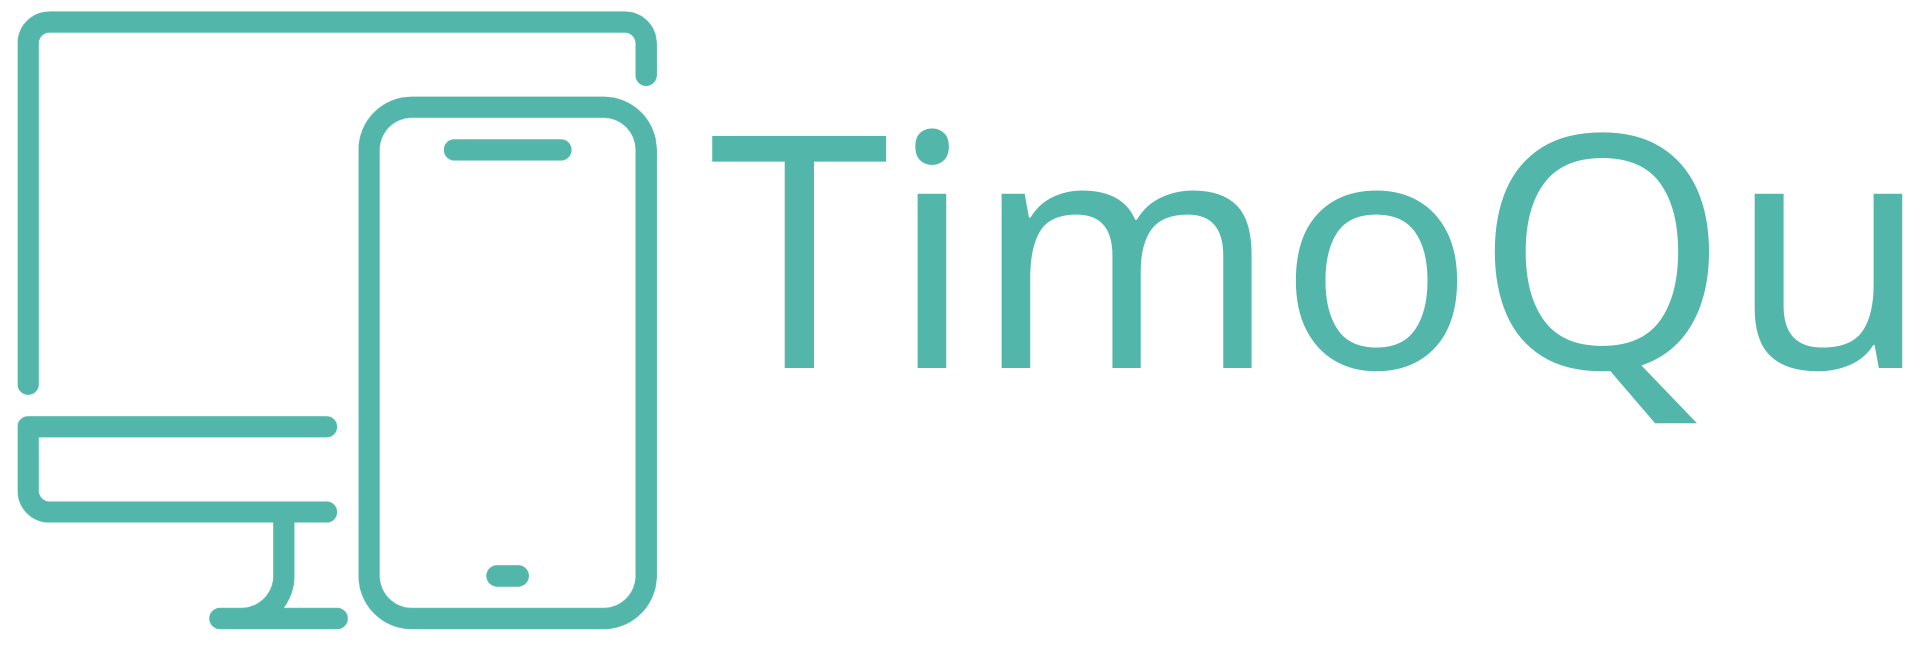 TimoQu WordPress Webdesign